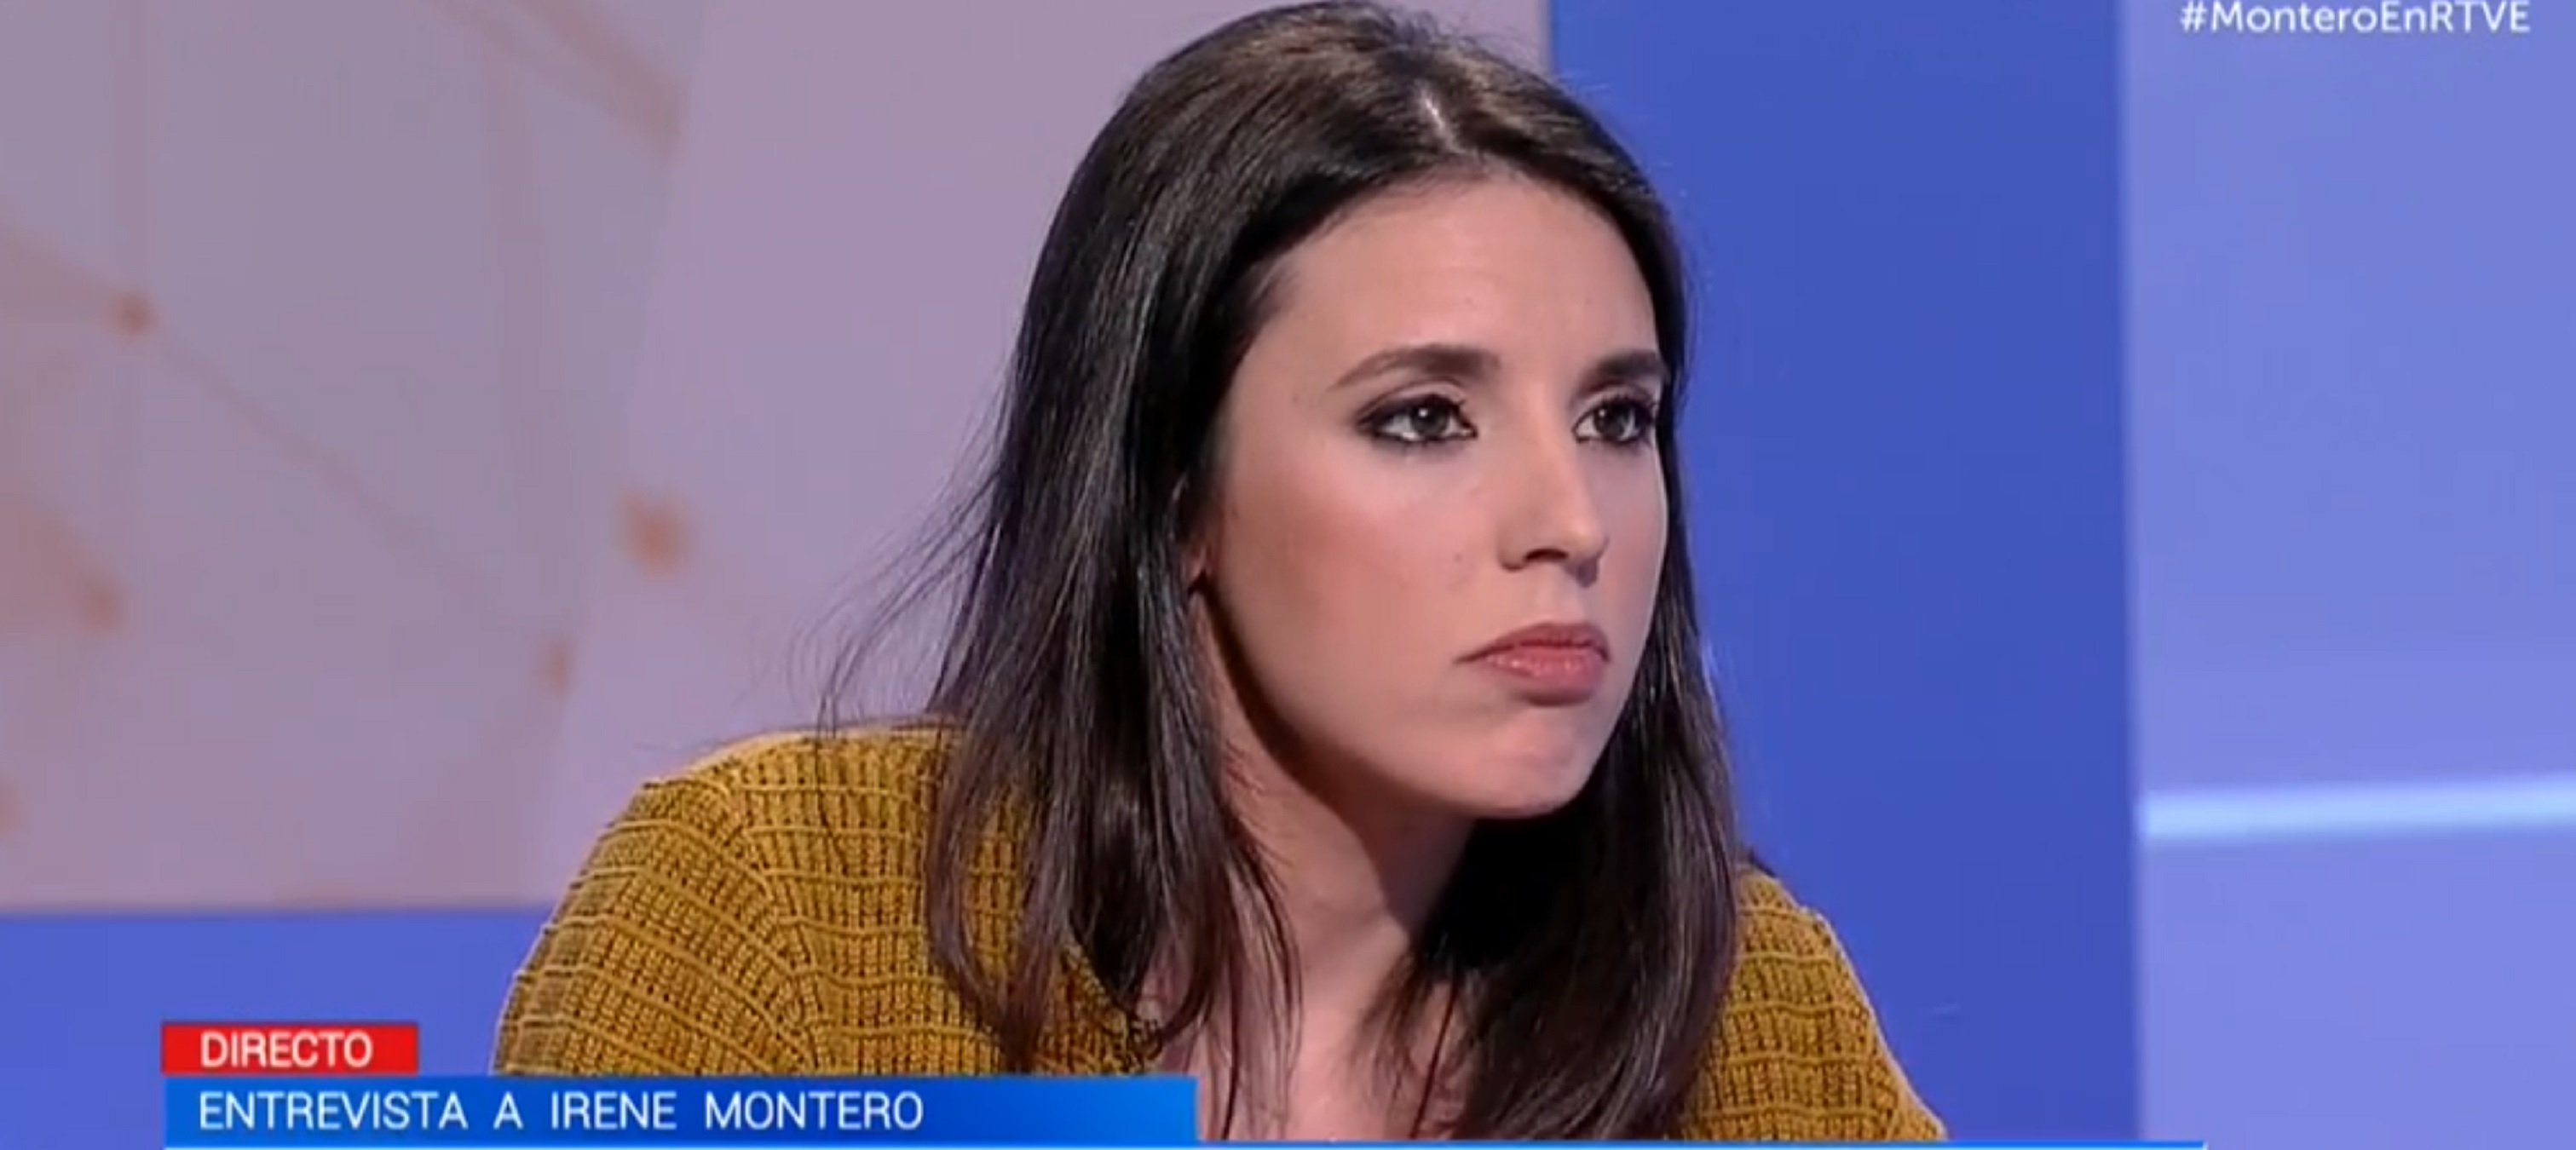 Irene Montero diu 'presos polítics' a TVE i rep atacs masclistes: "Miss boba"